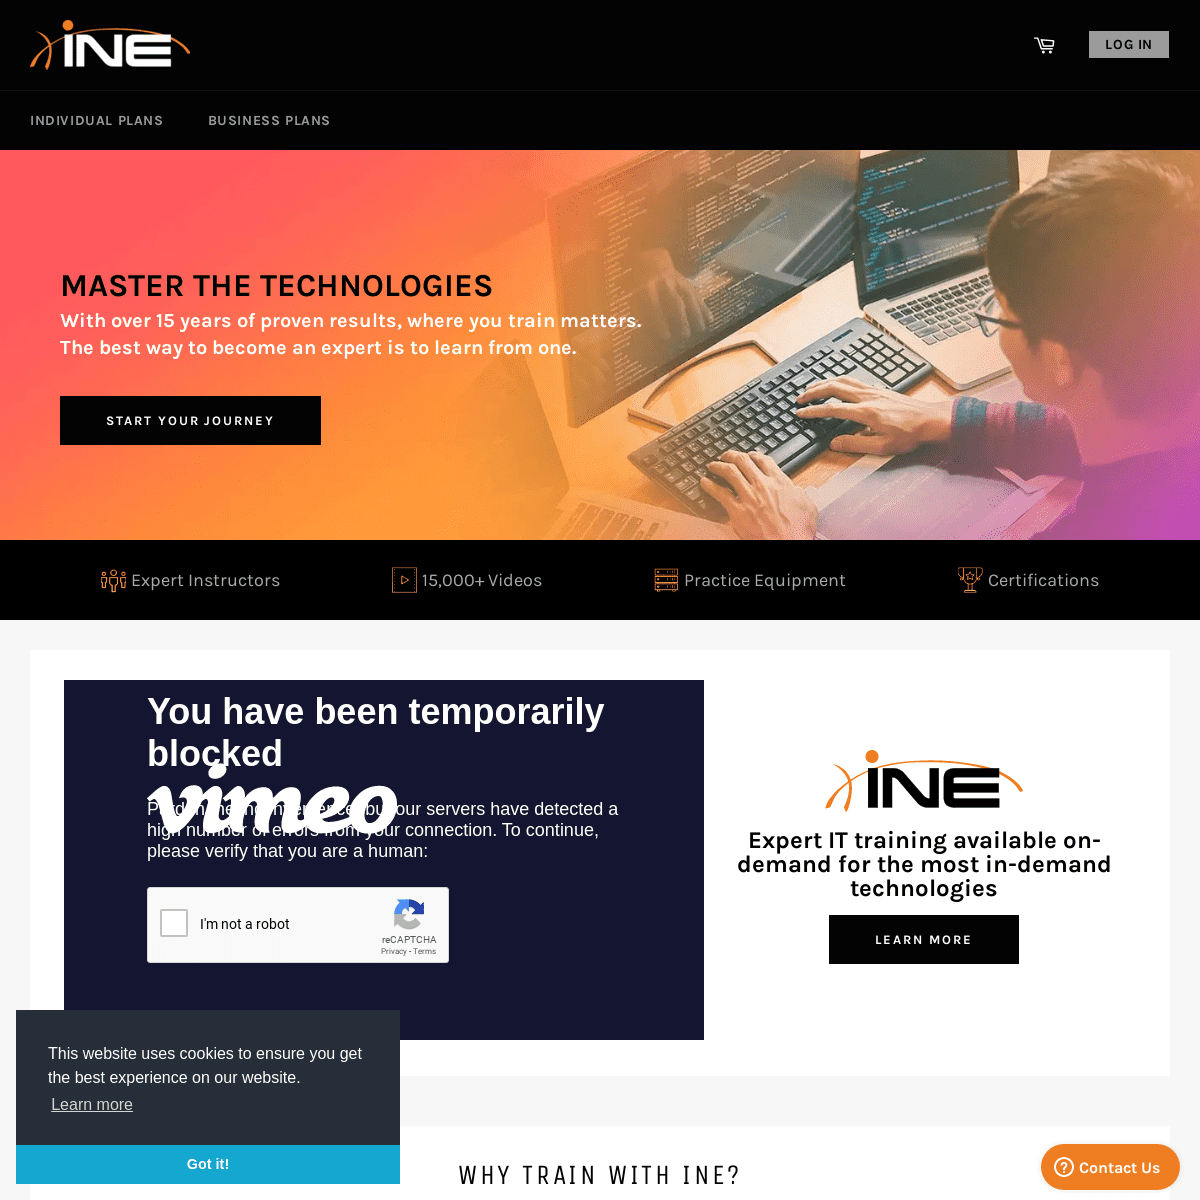 A complete backup of ine.com